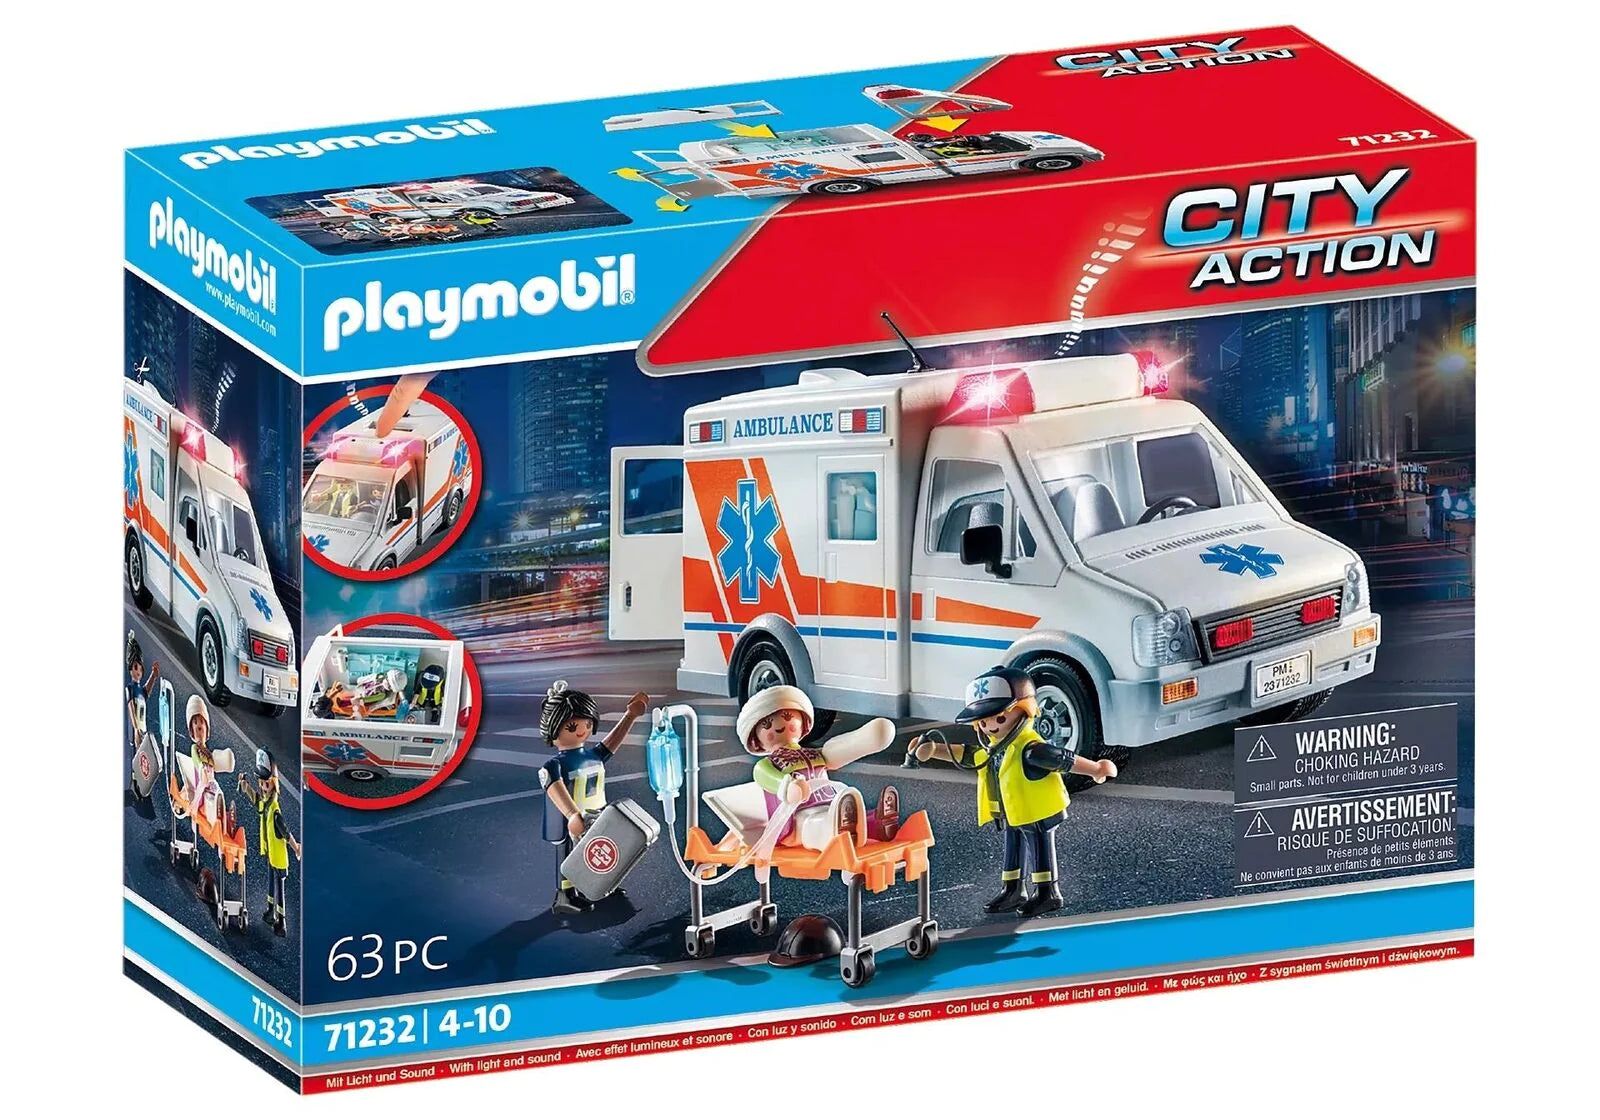 Playmobil City Action Hospital Ambulance